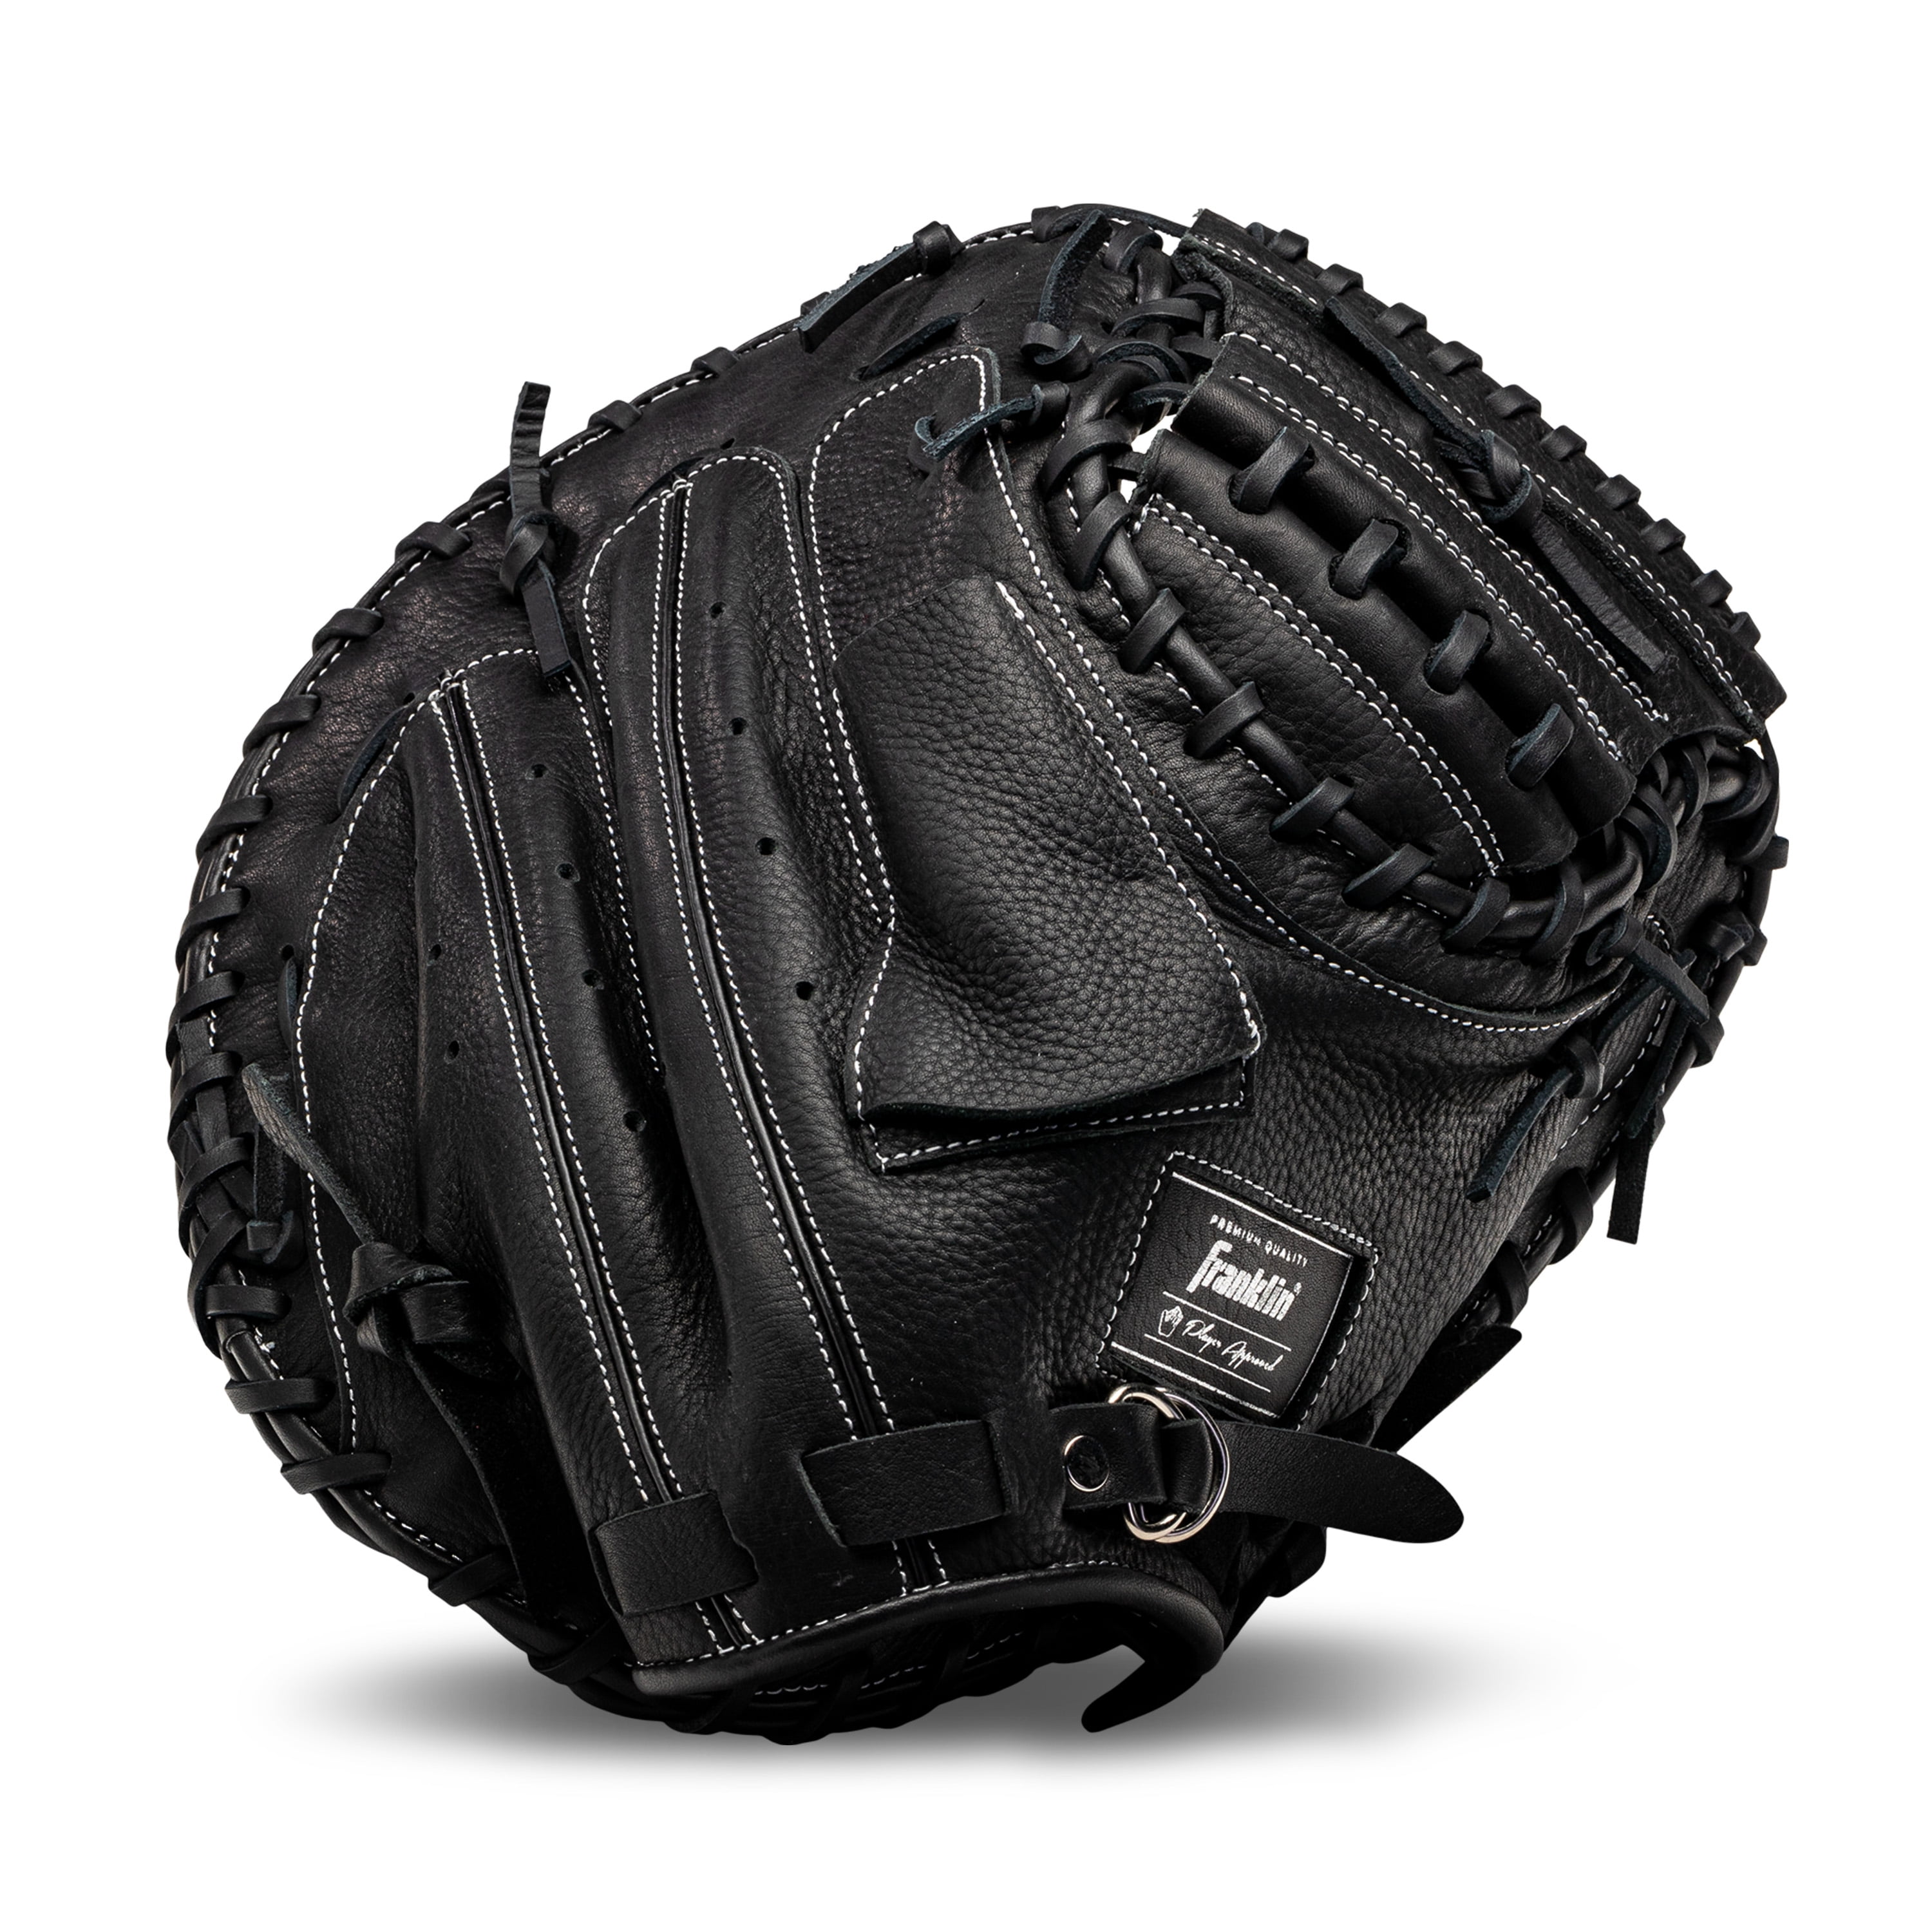 Franklin Sports Baseball Fielding Glove - Mens Adult and Youth Baseball Glove - CTZ5000 Black Cowhide Glove